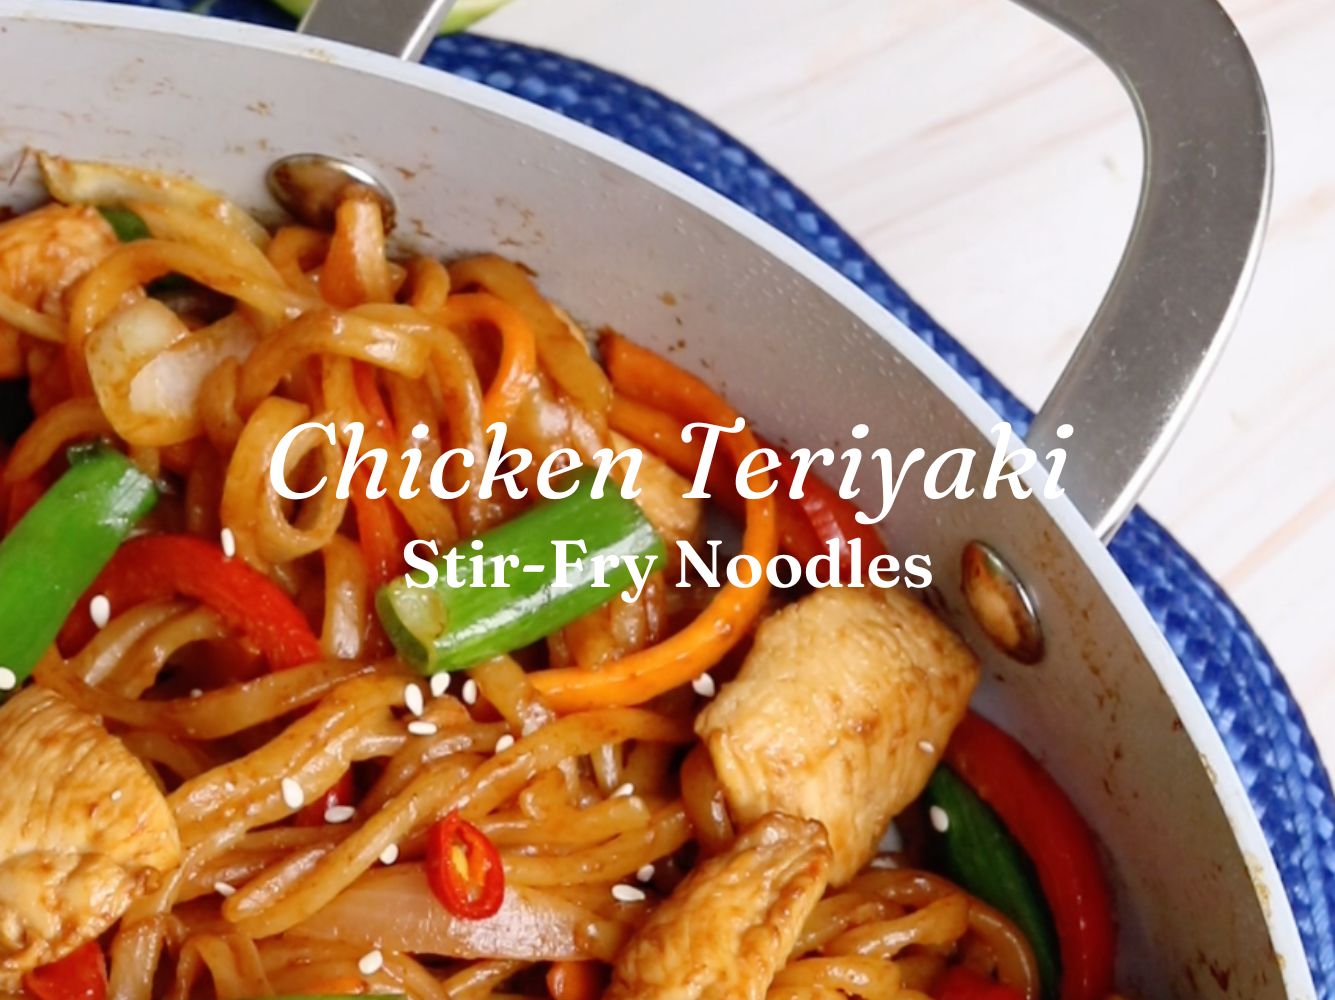 Chicken Teriyaki Stir-Fry Noodles